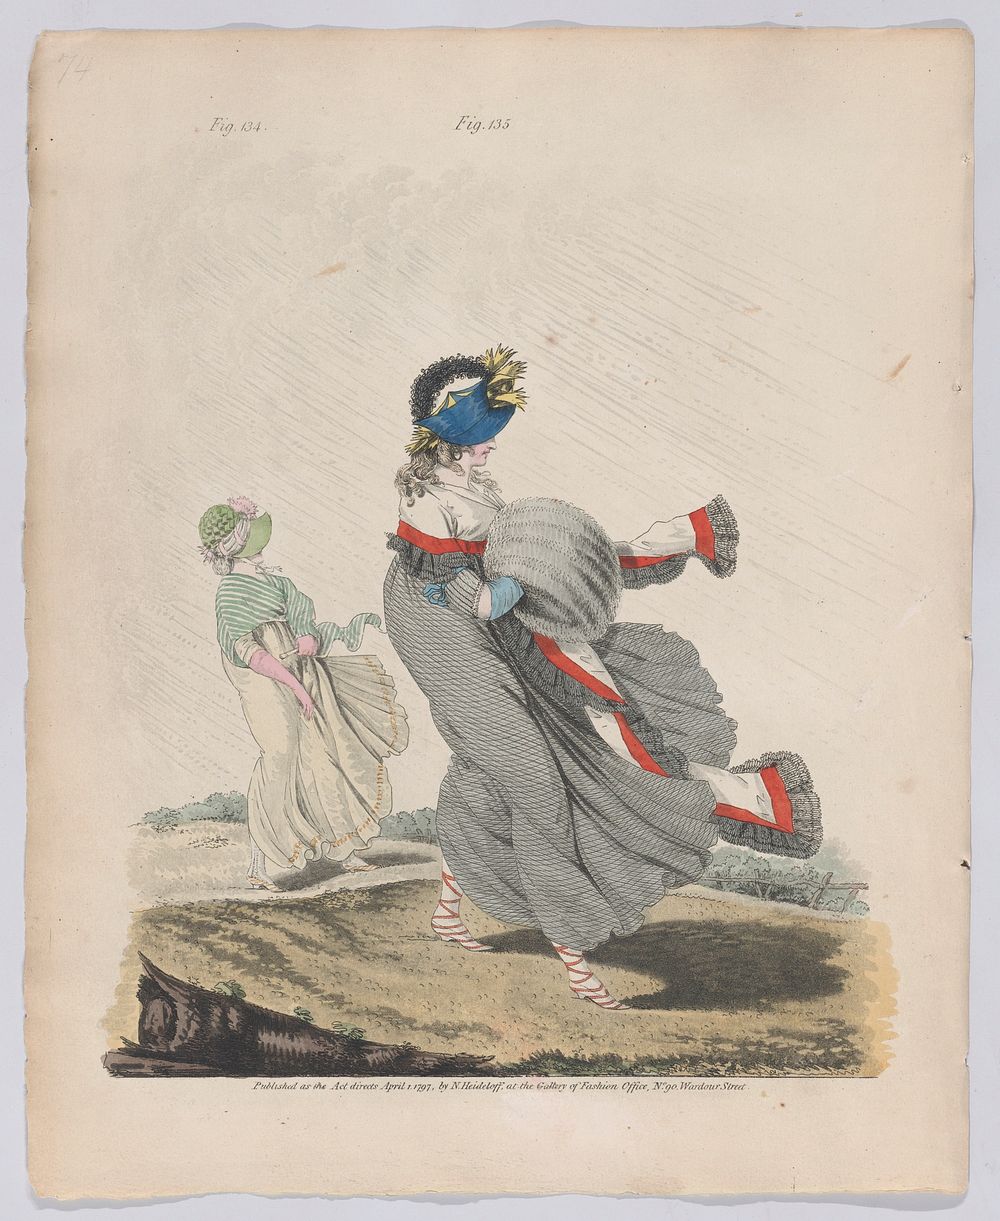 Gallery of Fashion, vol. IV: April 1 1797 - March 1 1798, Nicolaus Heideloff (publisher)